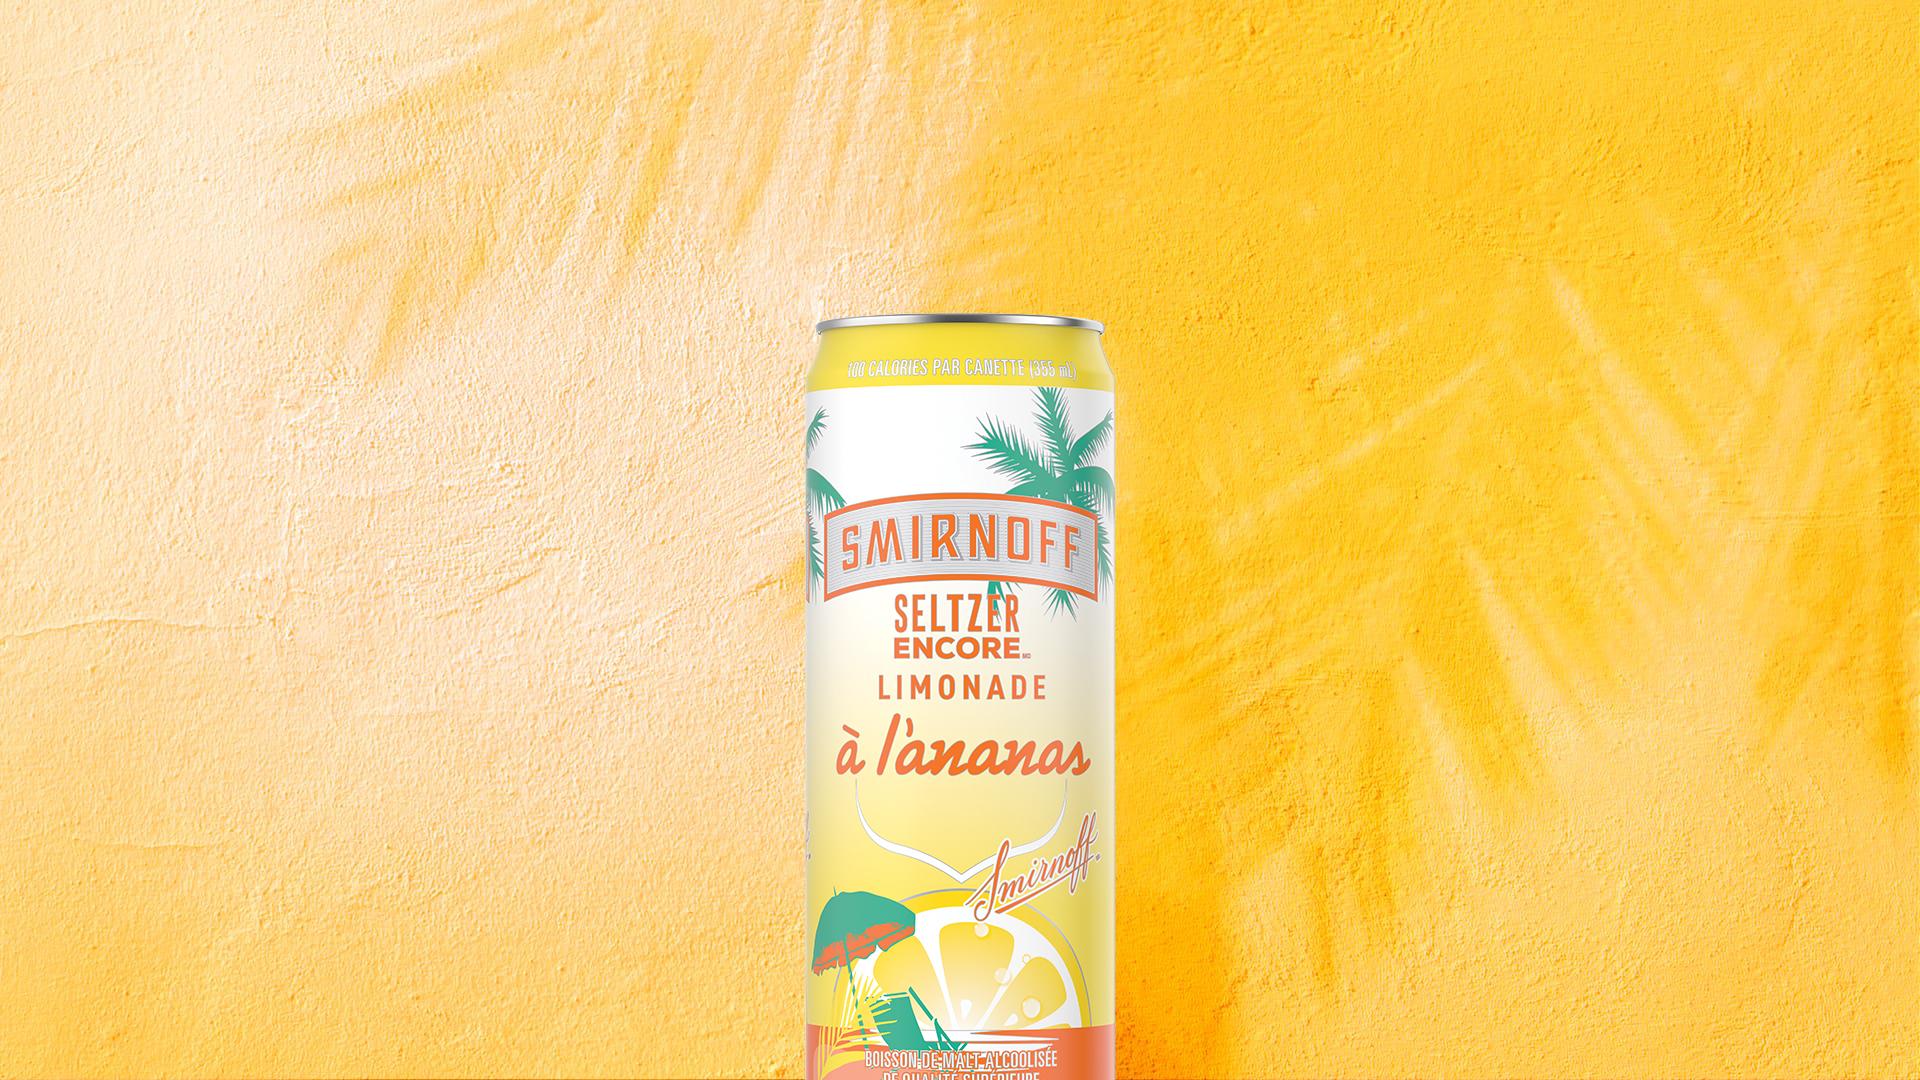 Smirnoff Seltzer Pineapple Lemonade on a tropical background